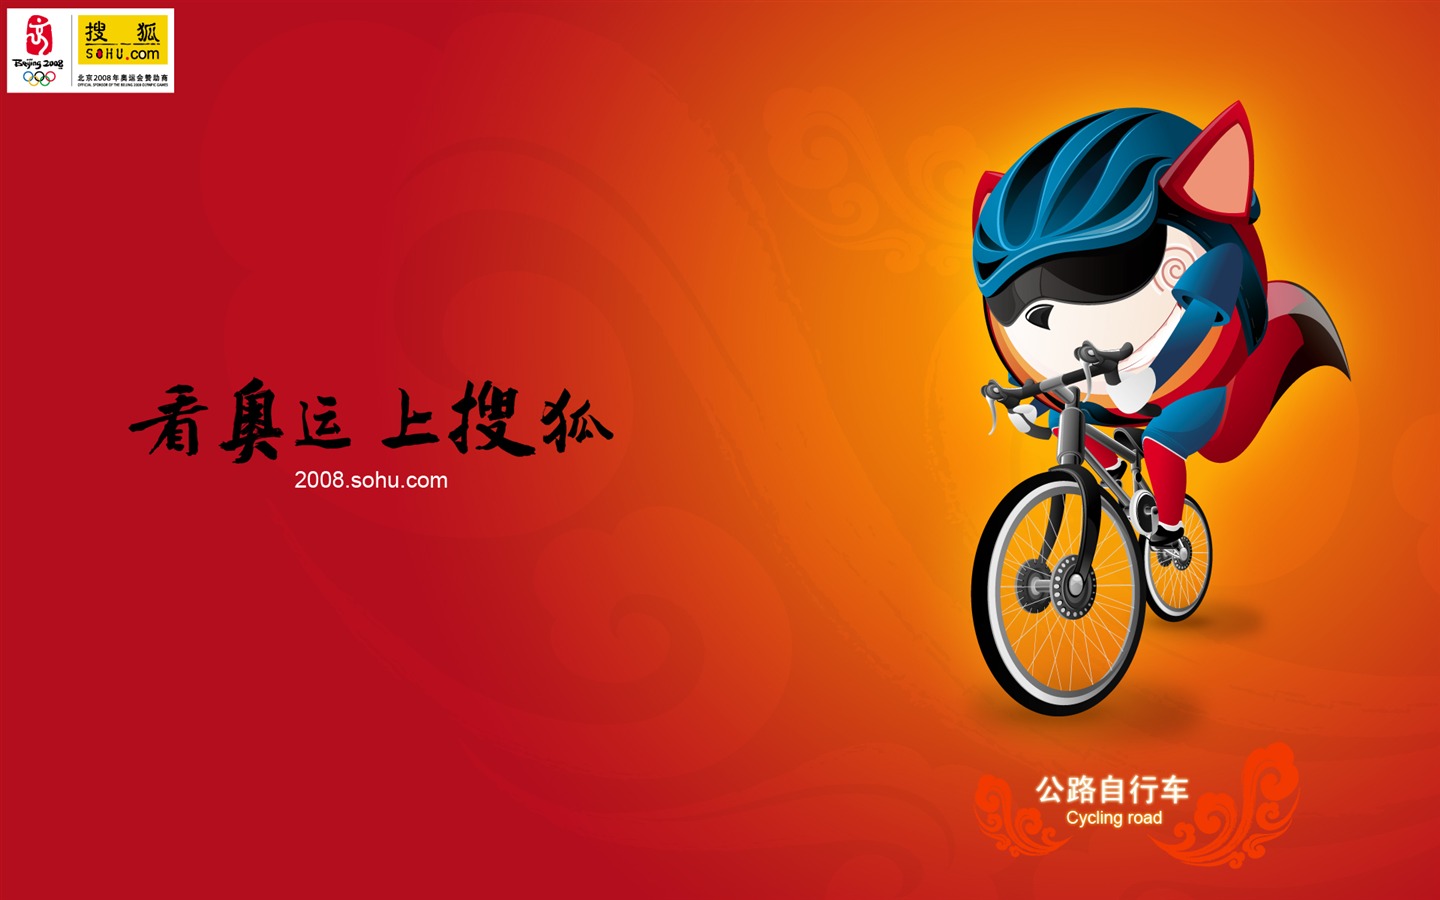 Sohu Olympic sports style wallpaper #25 - 1440x900